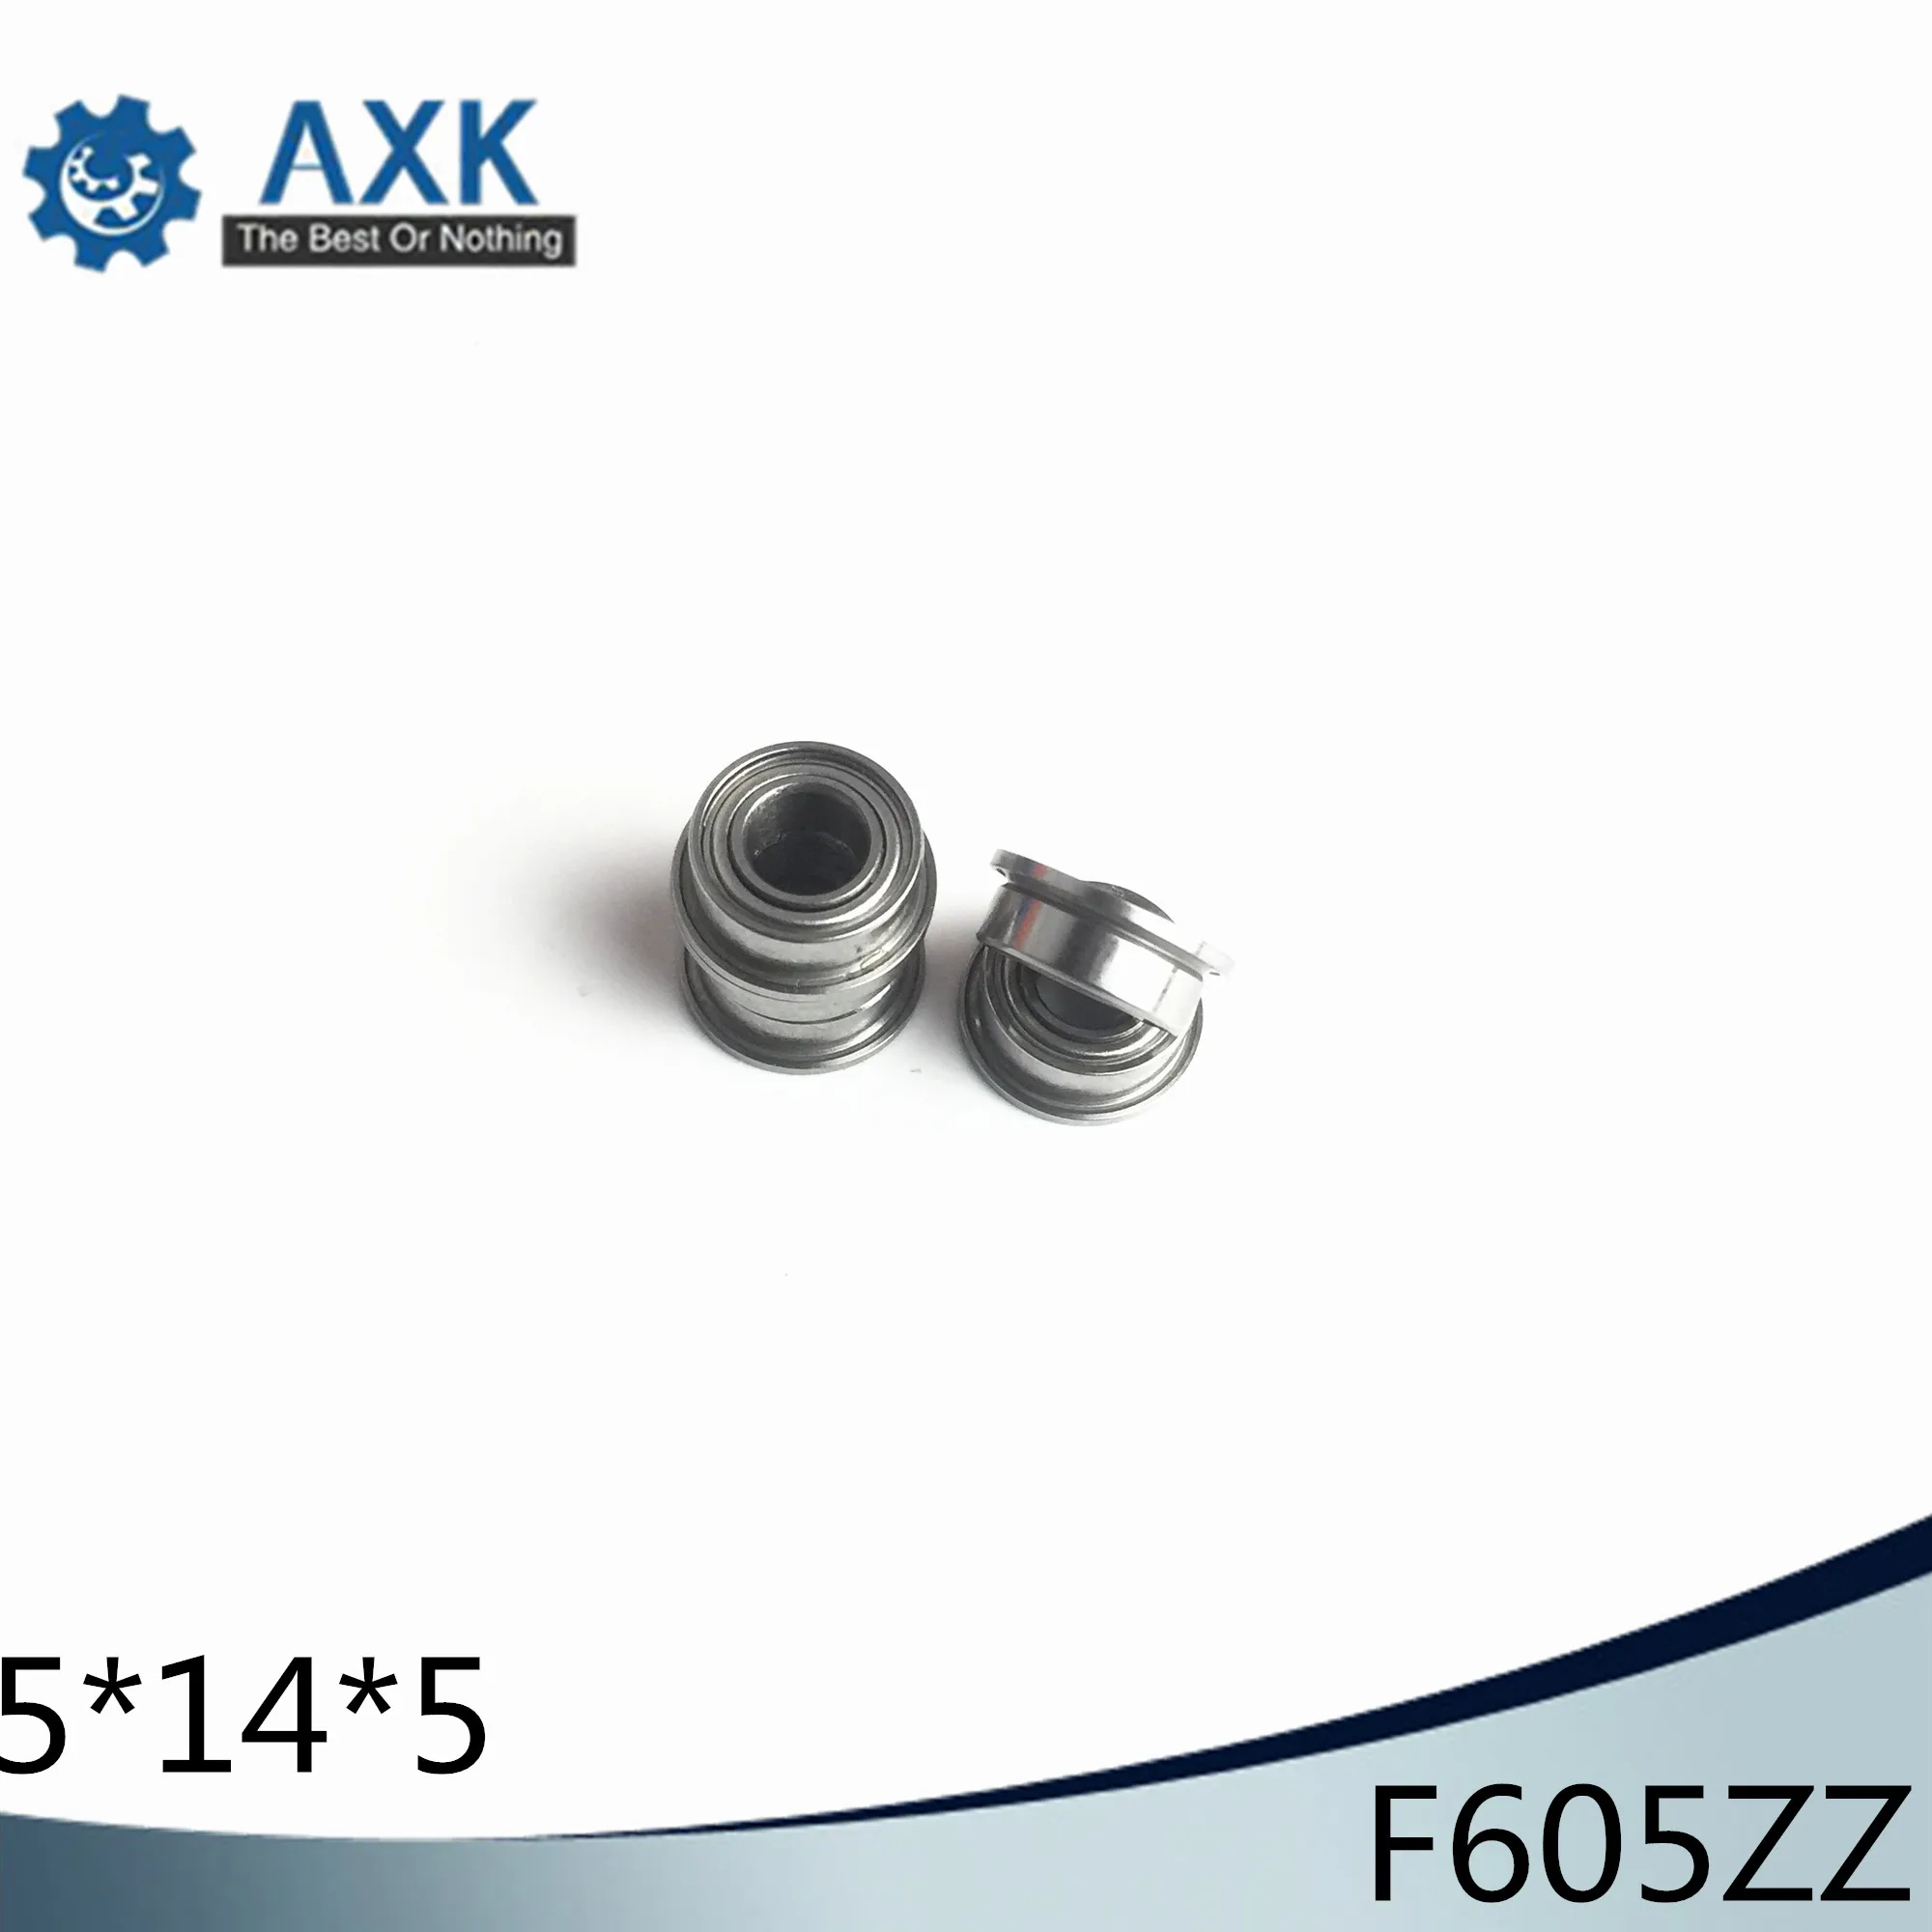 F605ZZ Flange Bearing 5x14x5 mm ABEC-1 ( 10 PCS ) F605 Z ZZ Flanged Ball Bearings